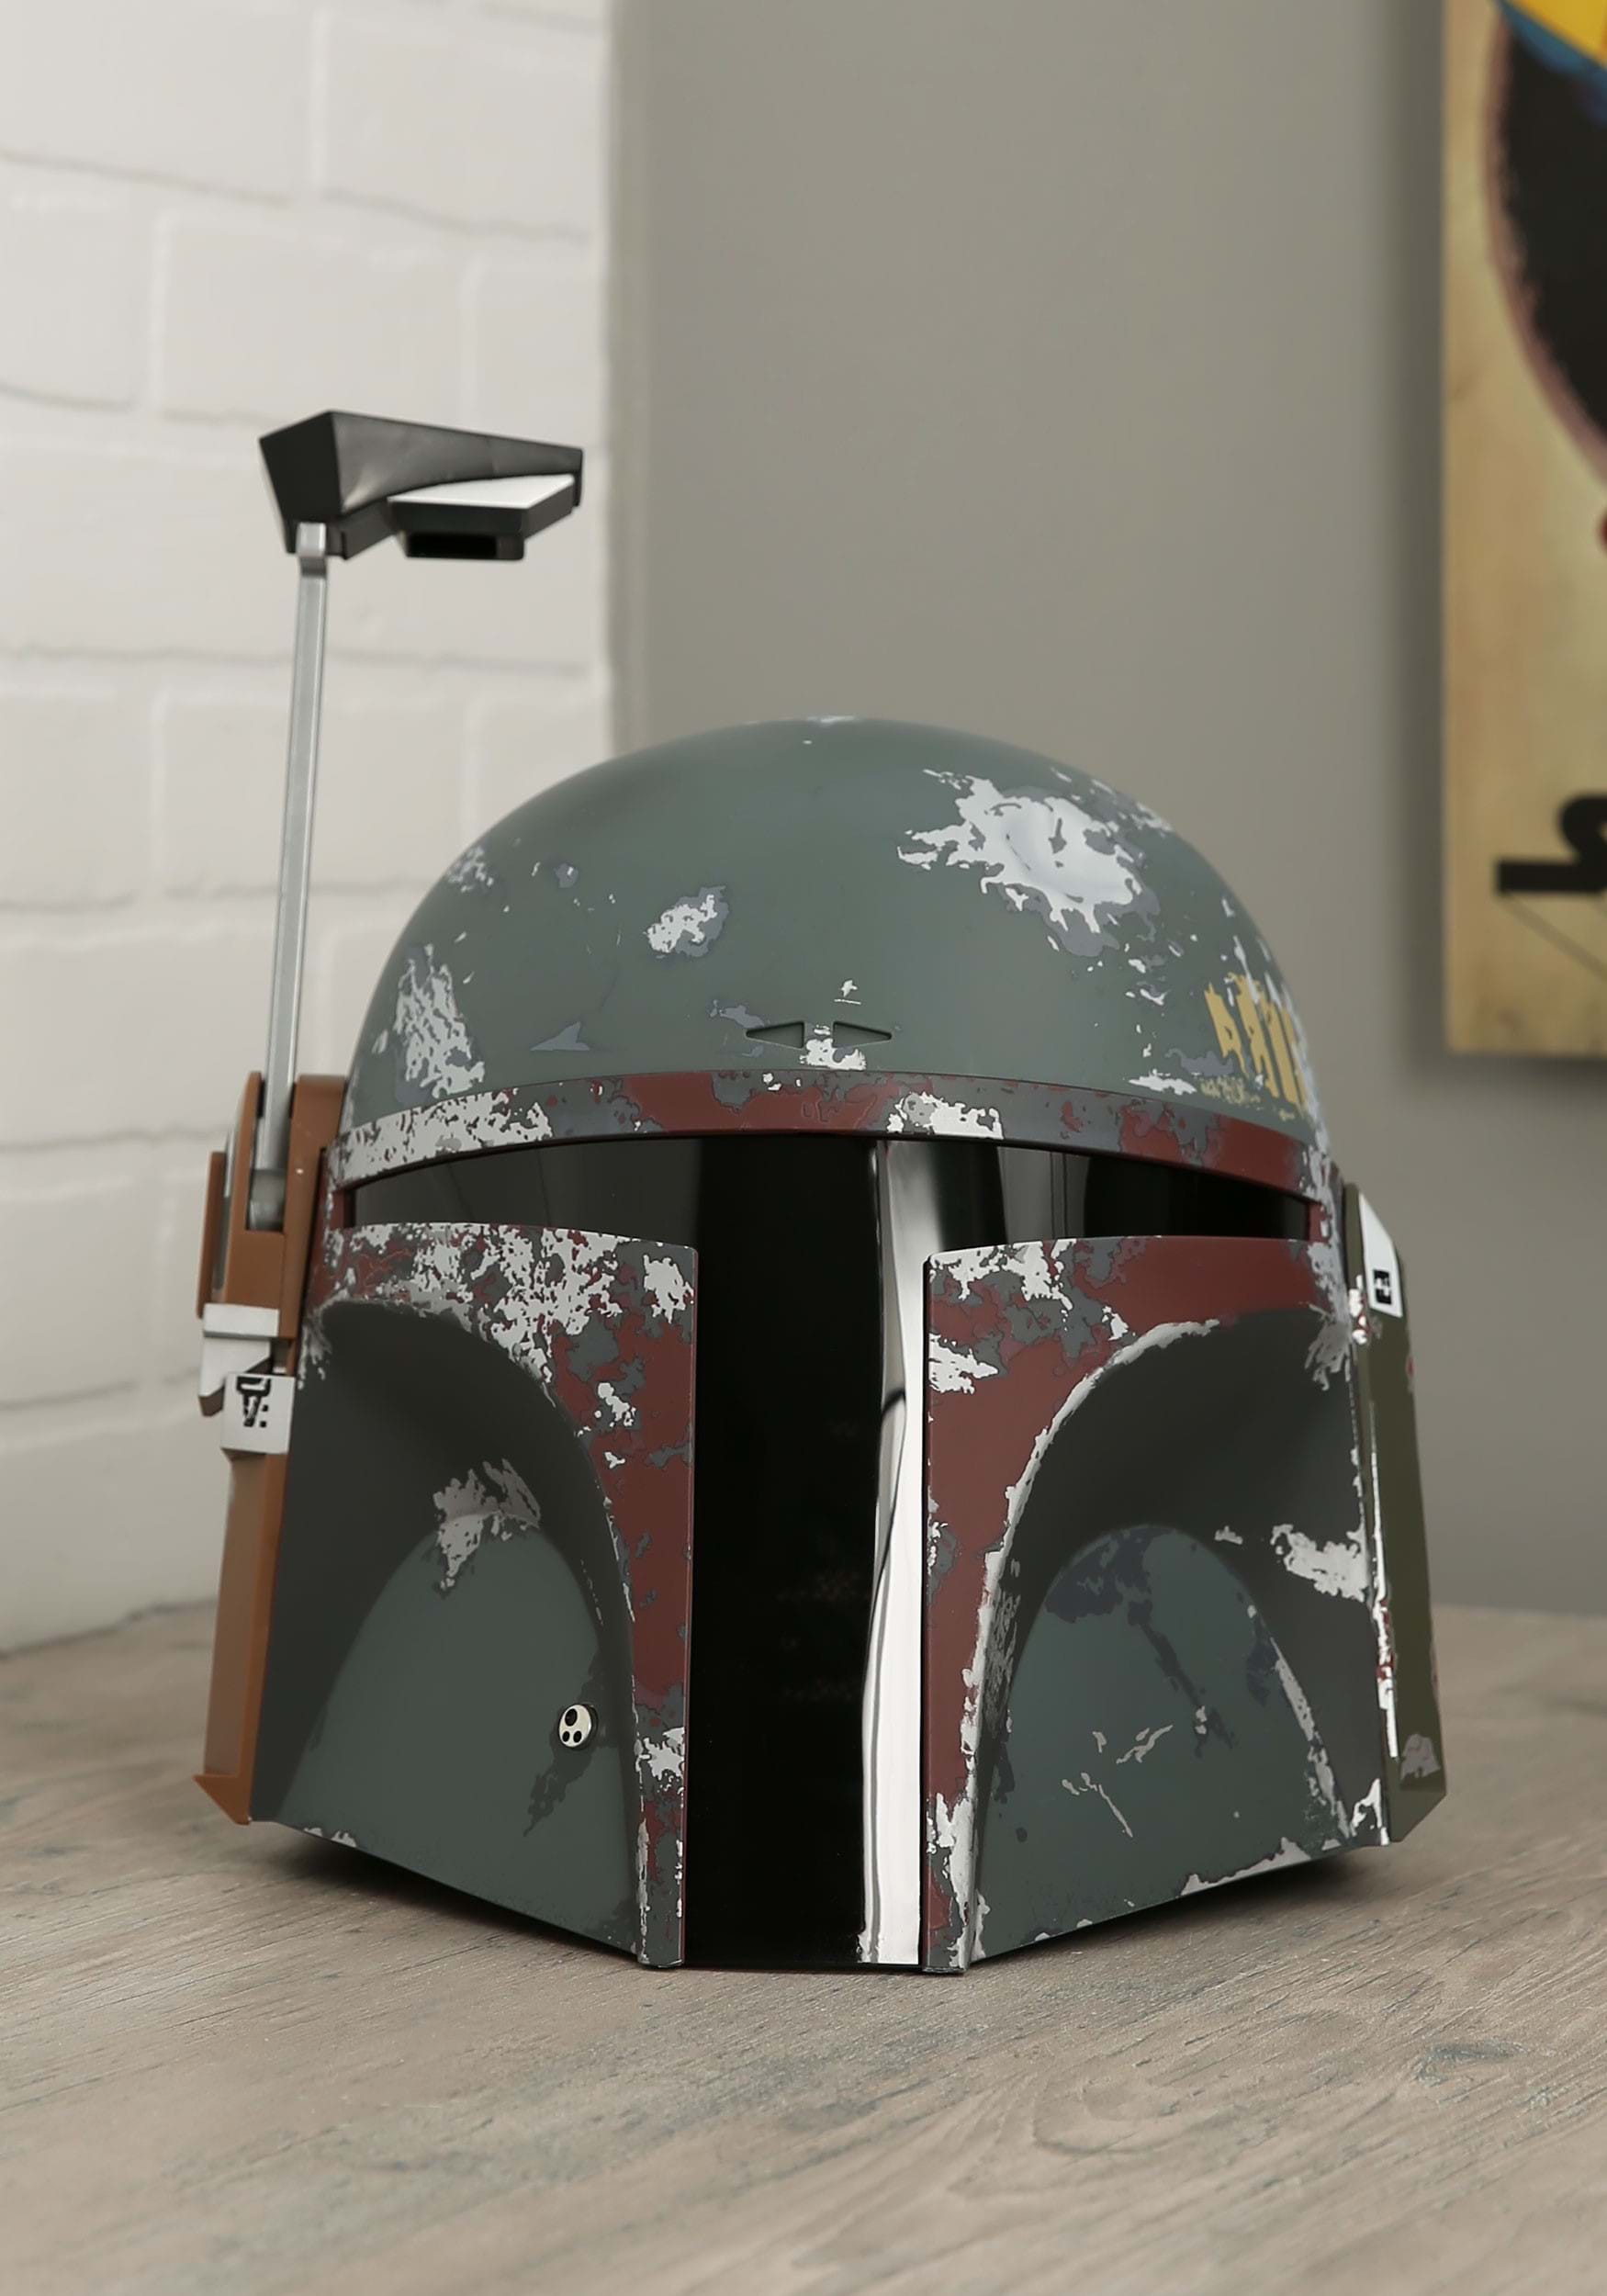 Star Wars The Black Series The Mandalorian Helmet Collectibles Accessories Hats & Caps Helmets Military Helmets 